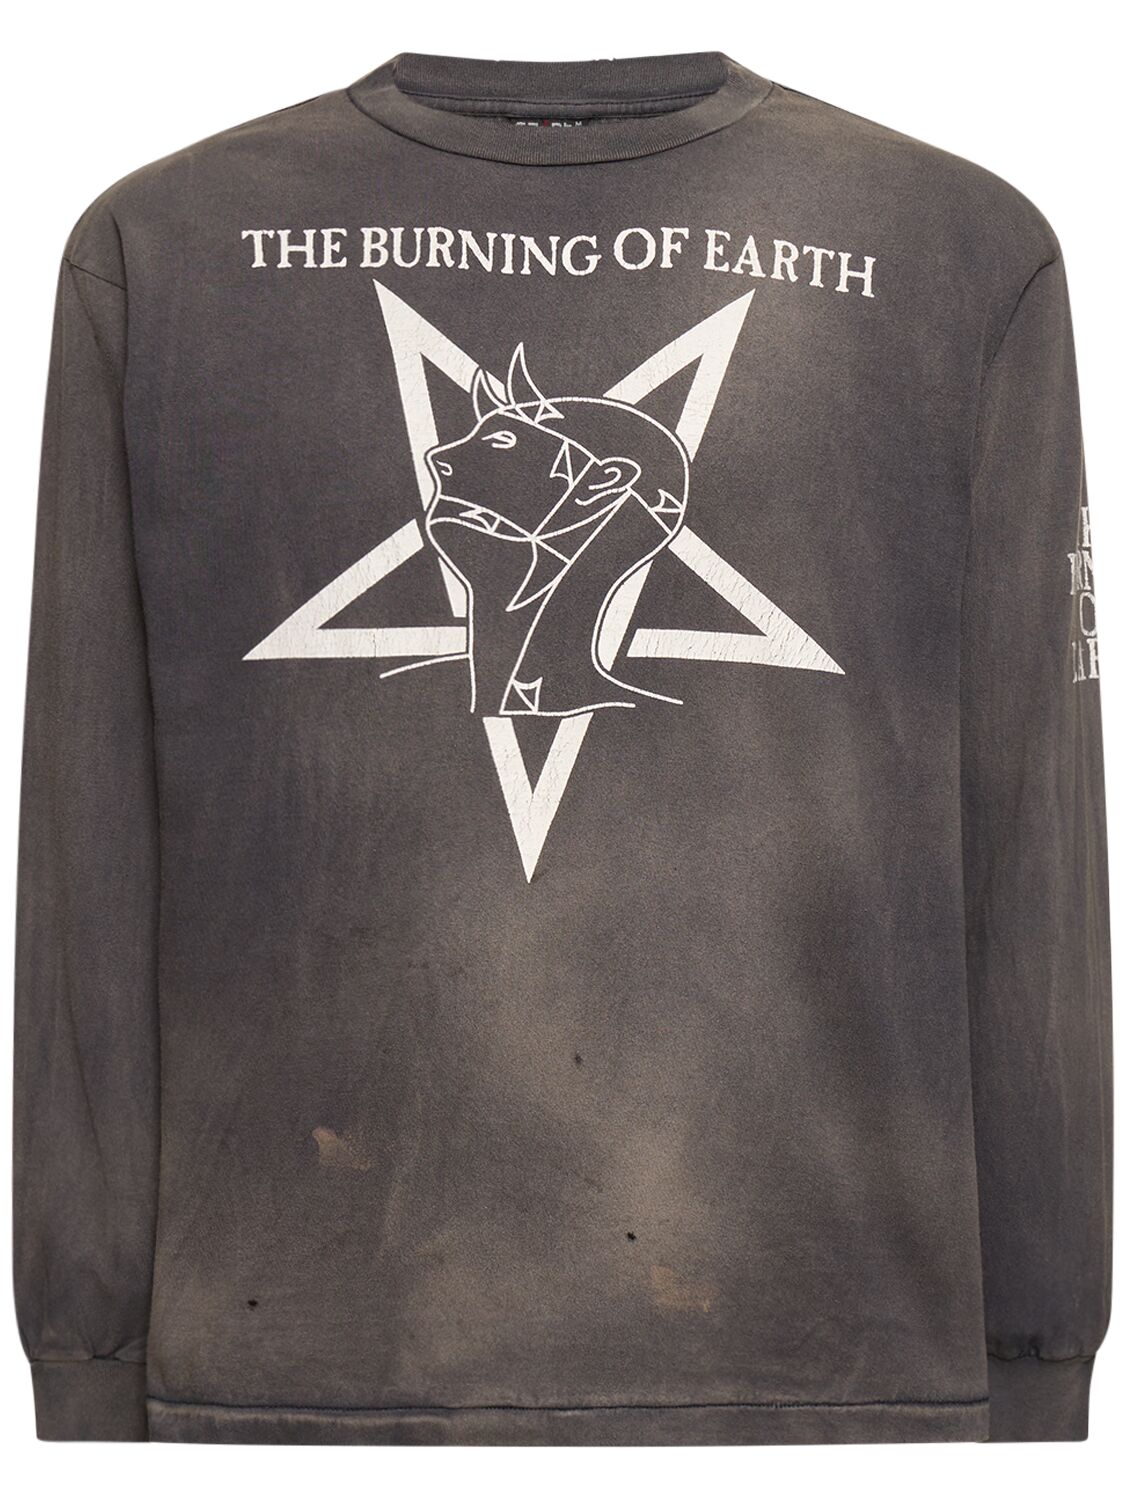 BURN OF EARTH长袖T恤